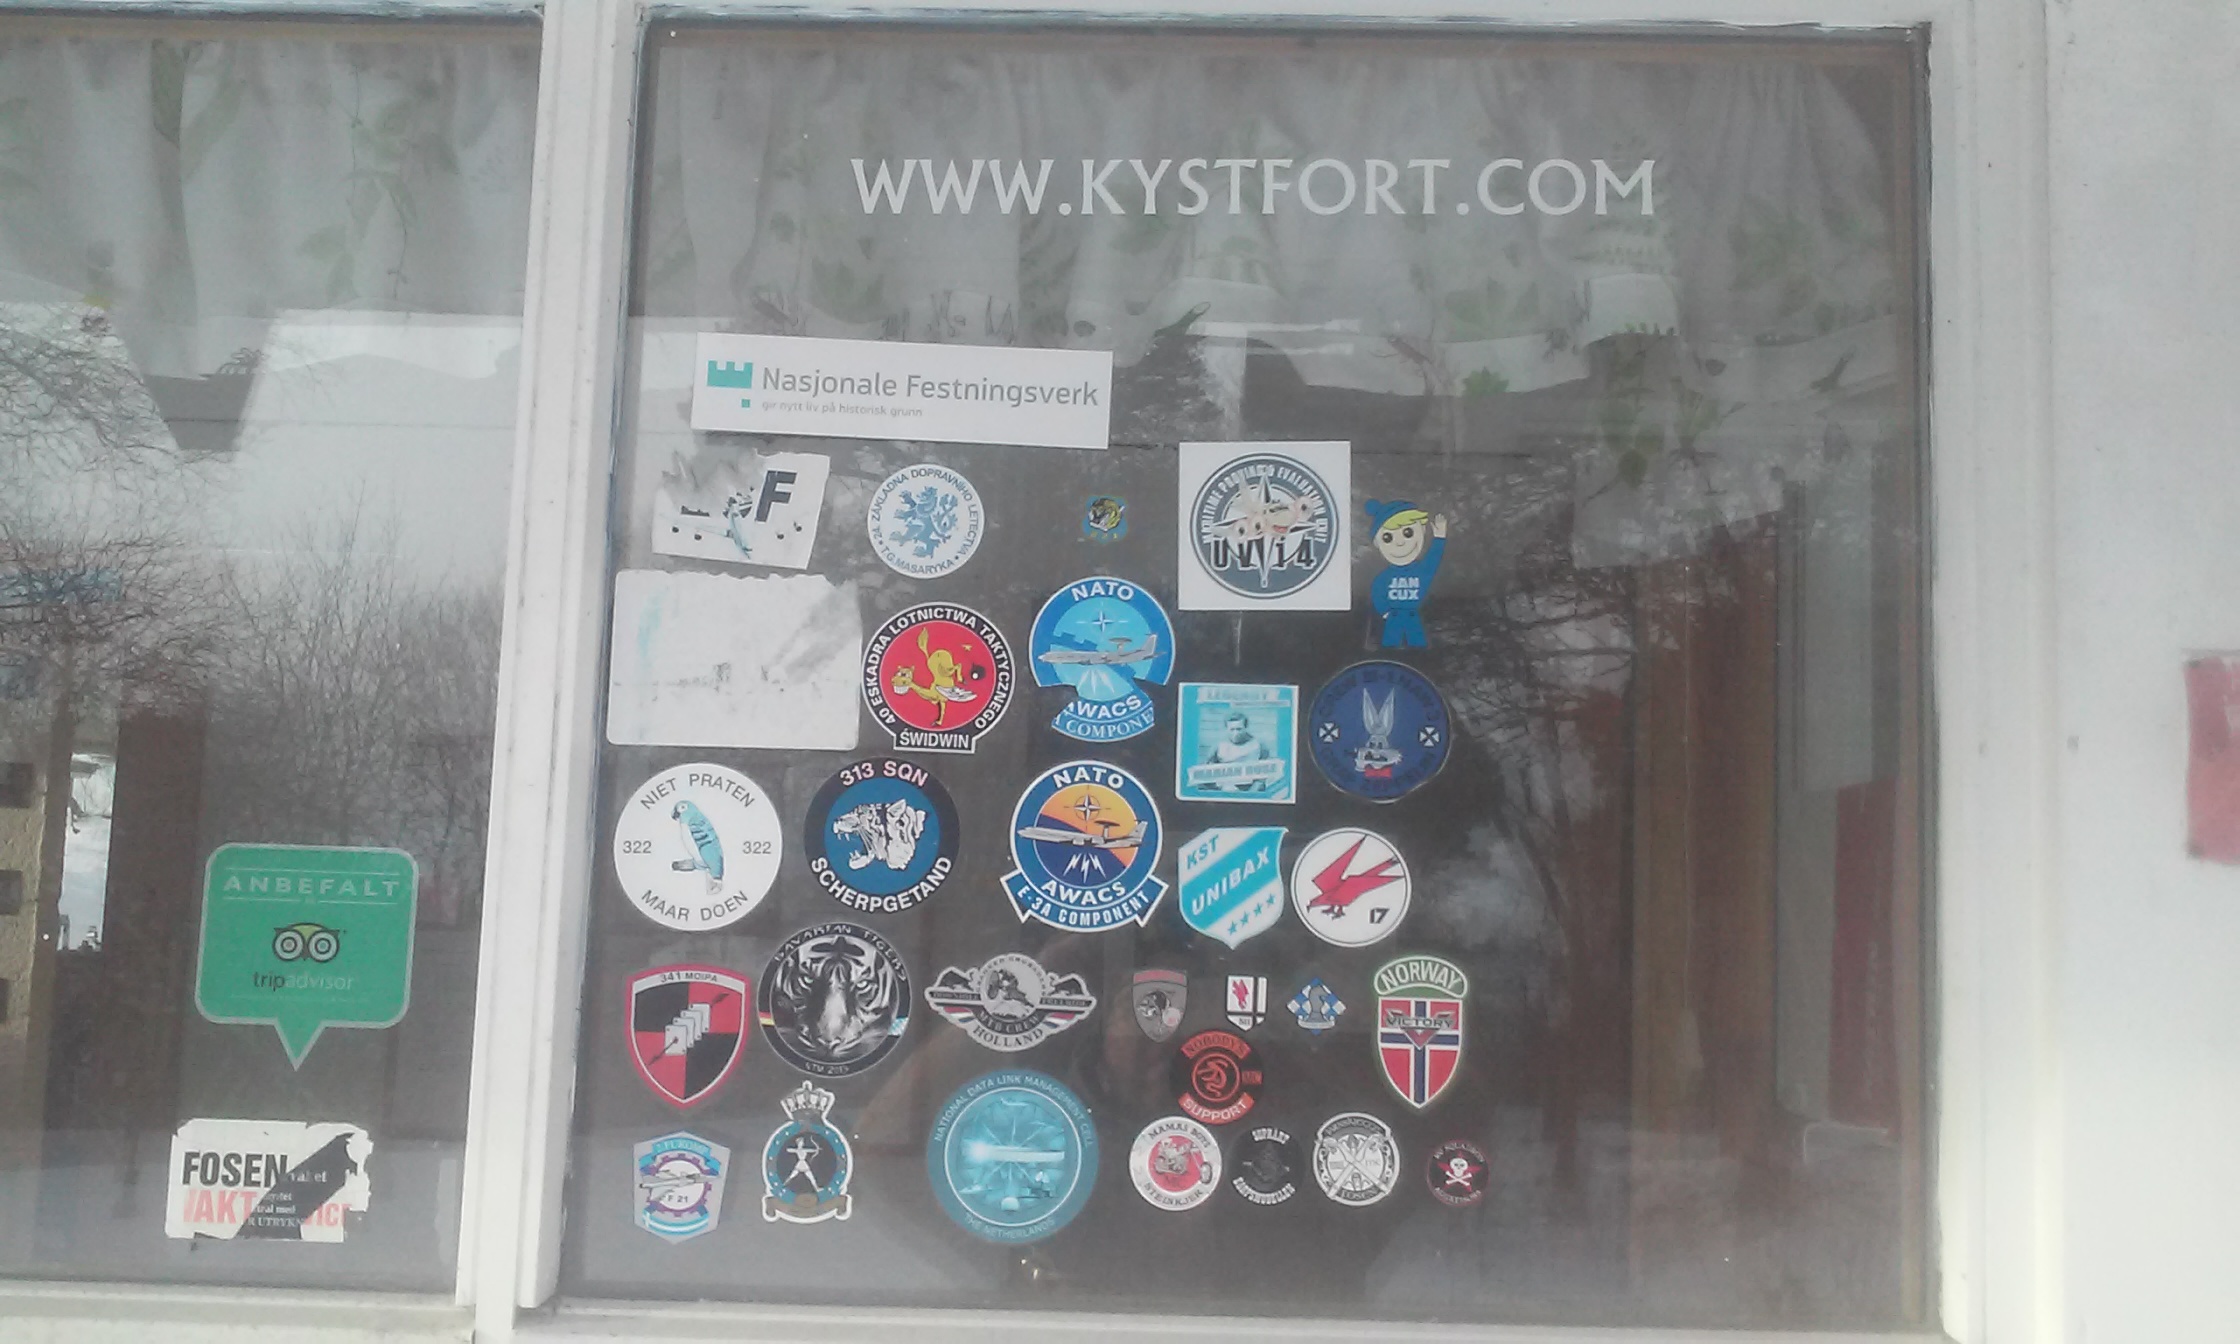 Kystfort.com